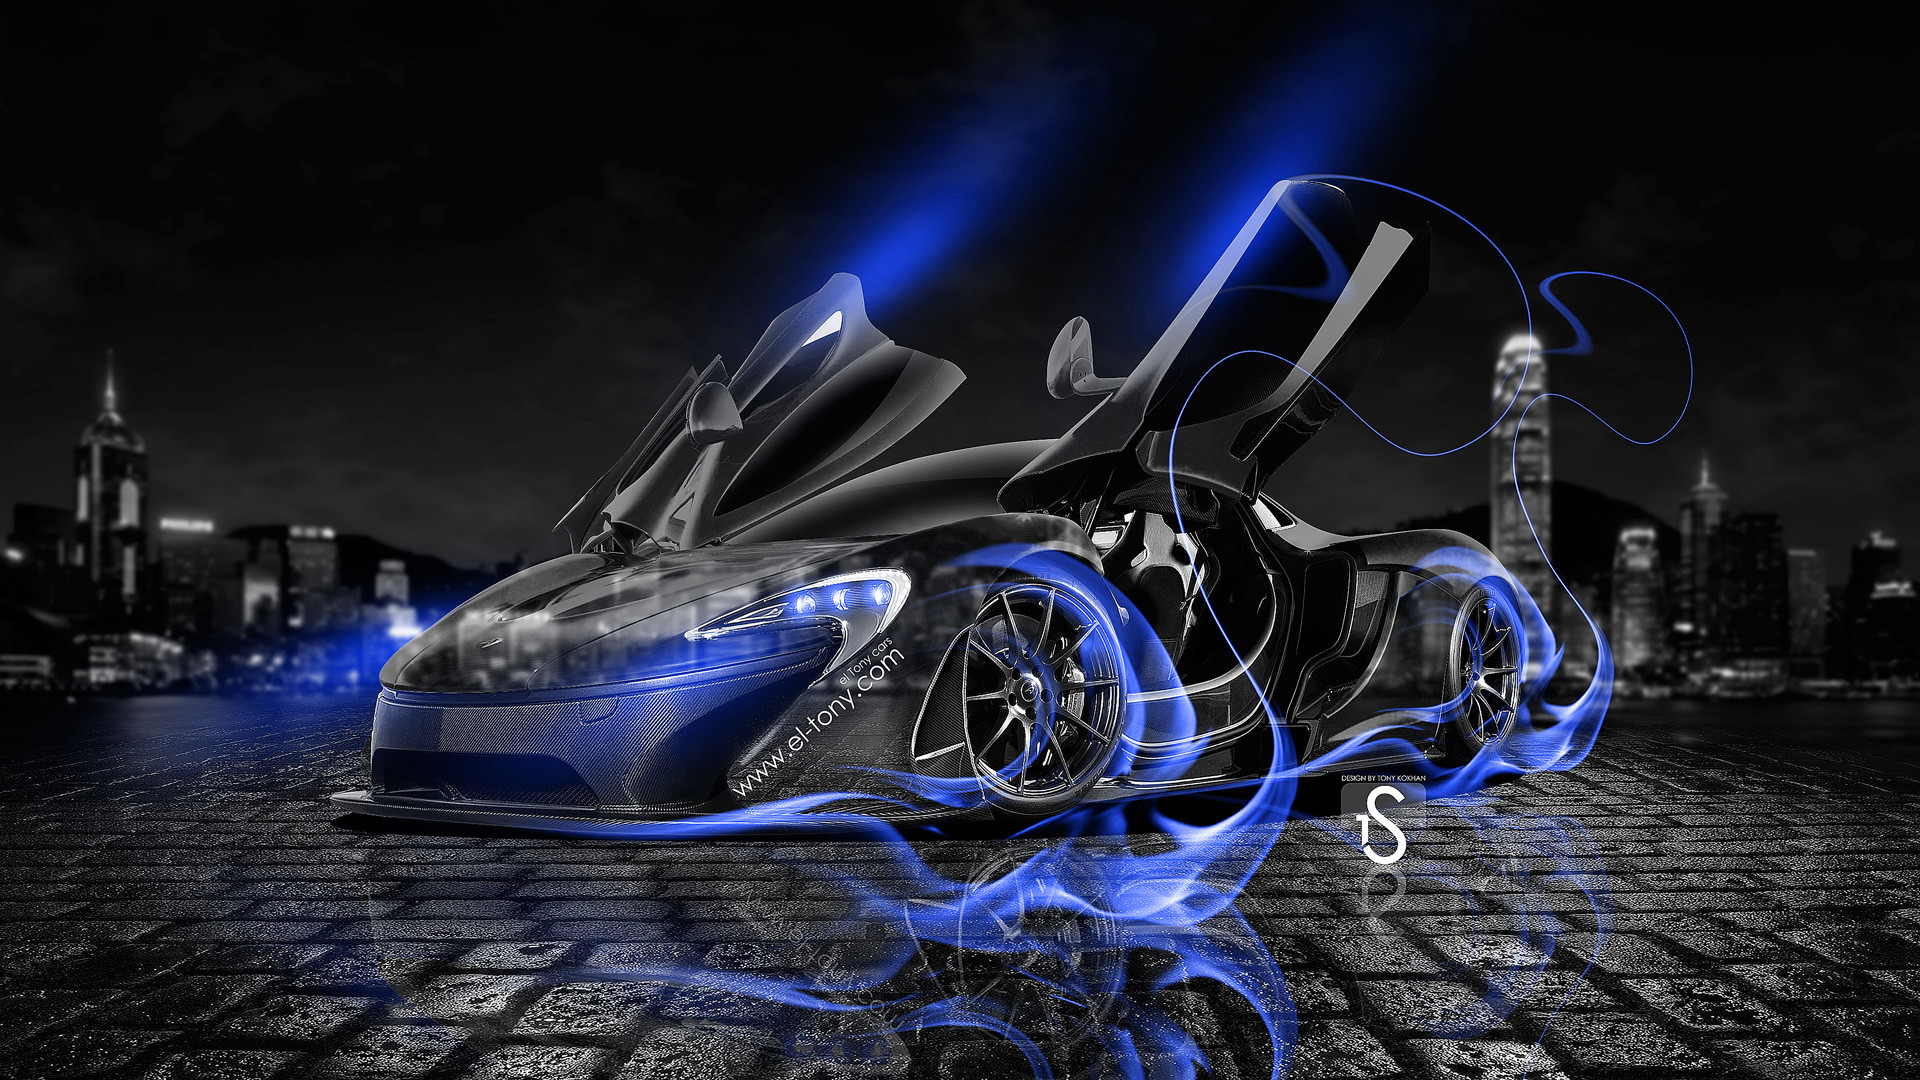 1920x1080 McLaren P1 GTR Blue Fire Abstract | Î£XÎ©TIC SUPÎ£RCARS â | Pinterest |  Mclaren p1, Dream cars and Cars